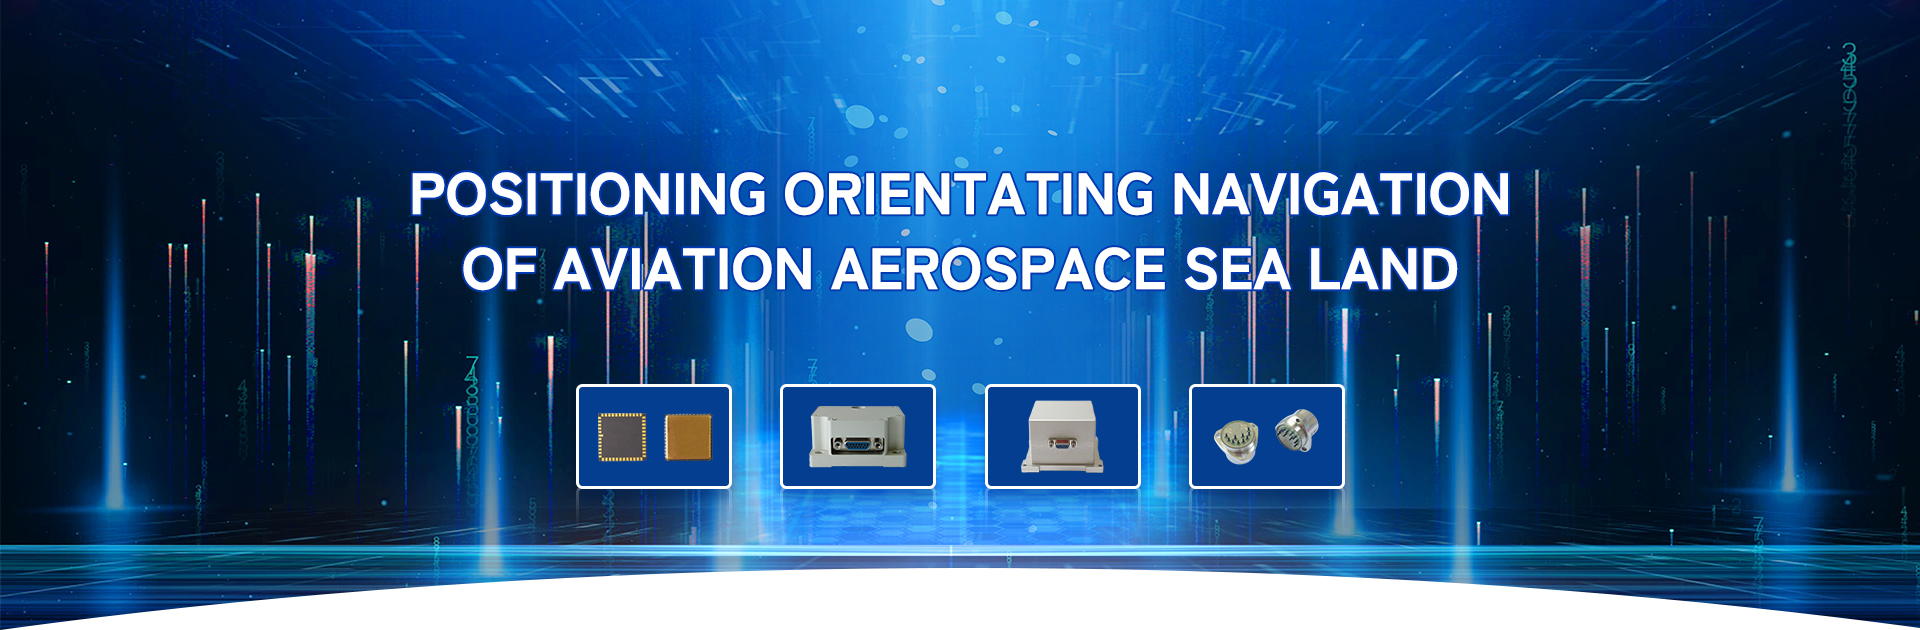 Positioning orientating navigation of aviation aerospace sea land